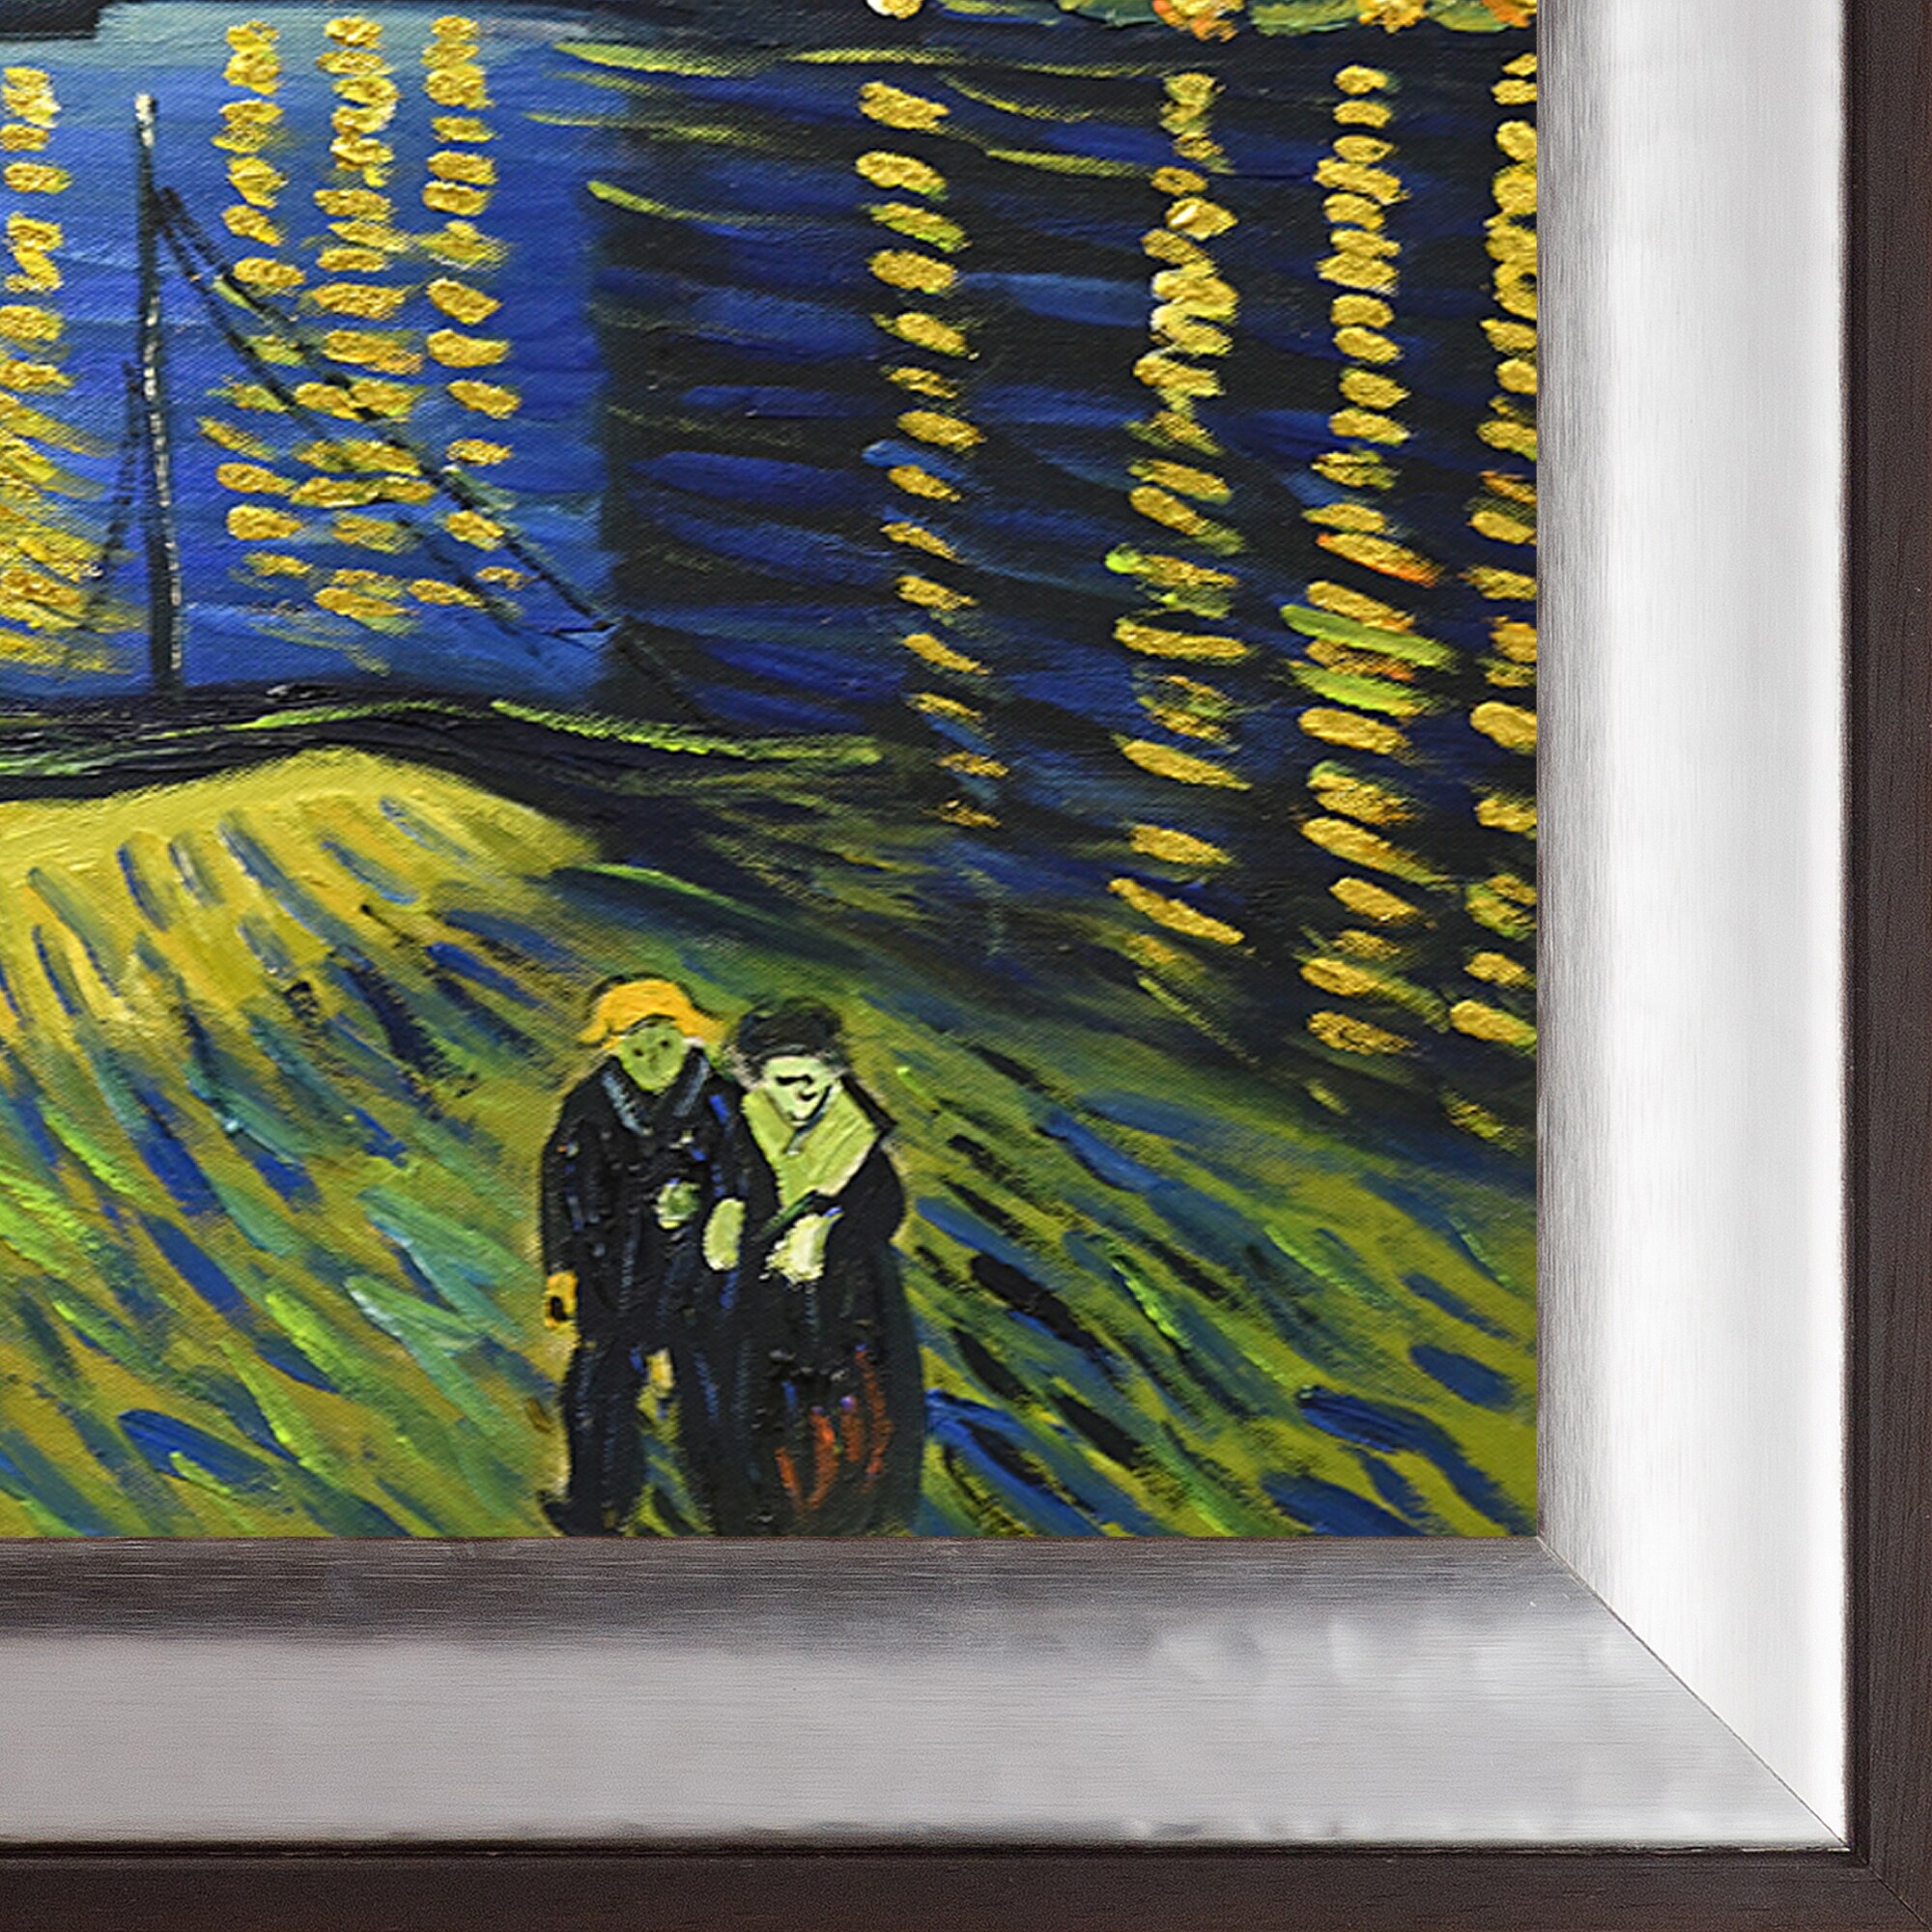 La Pastiche Vincent Van Gogh Framed Hand Painted Oil on Canvas 29.25 x 25.25